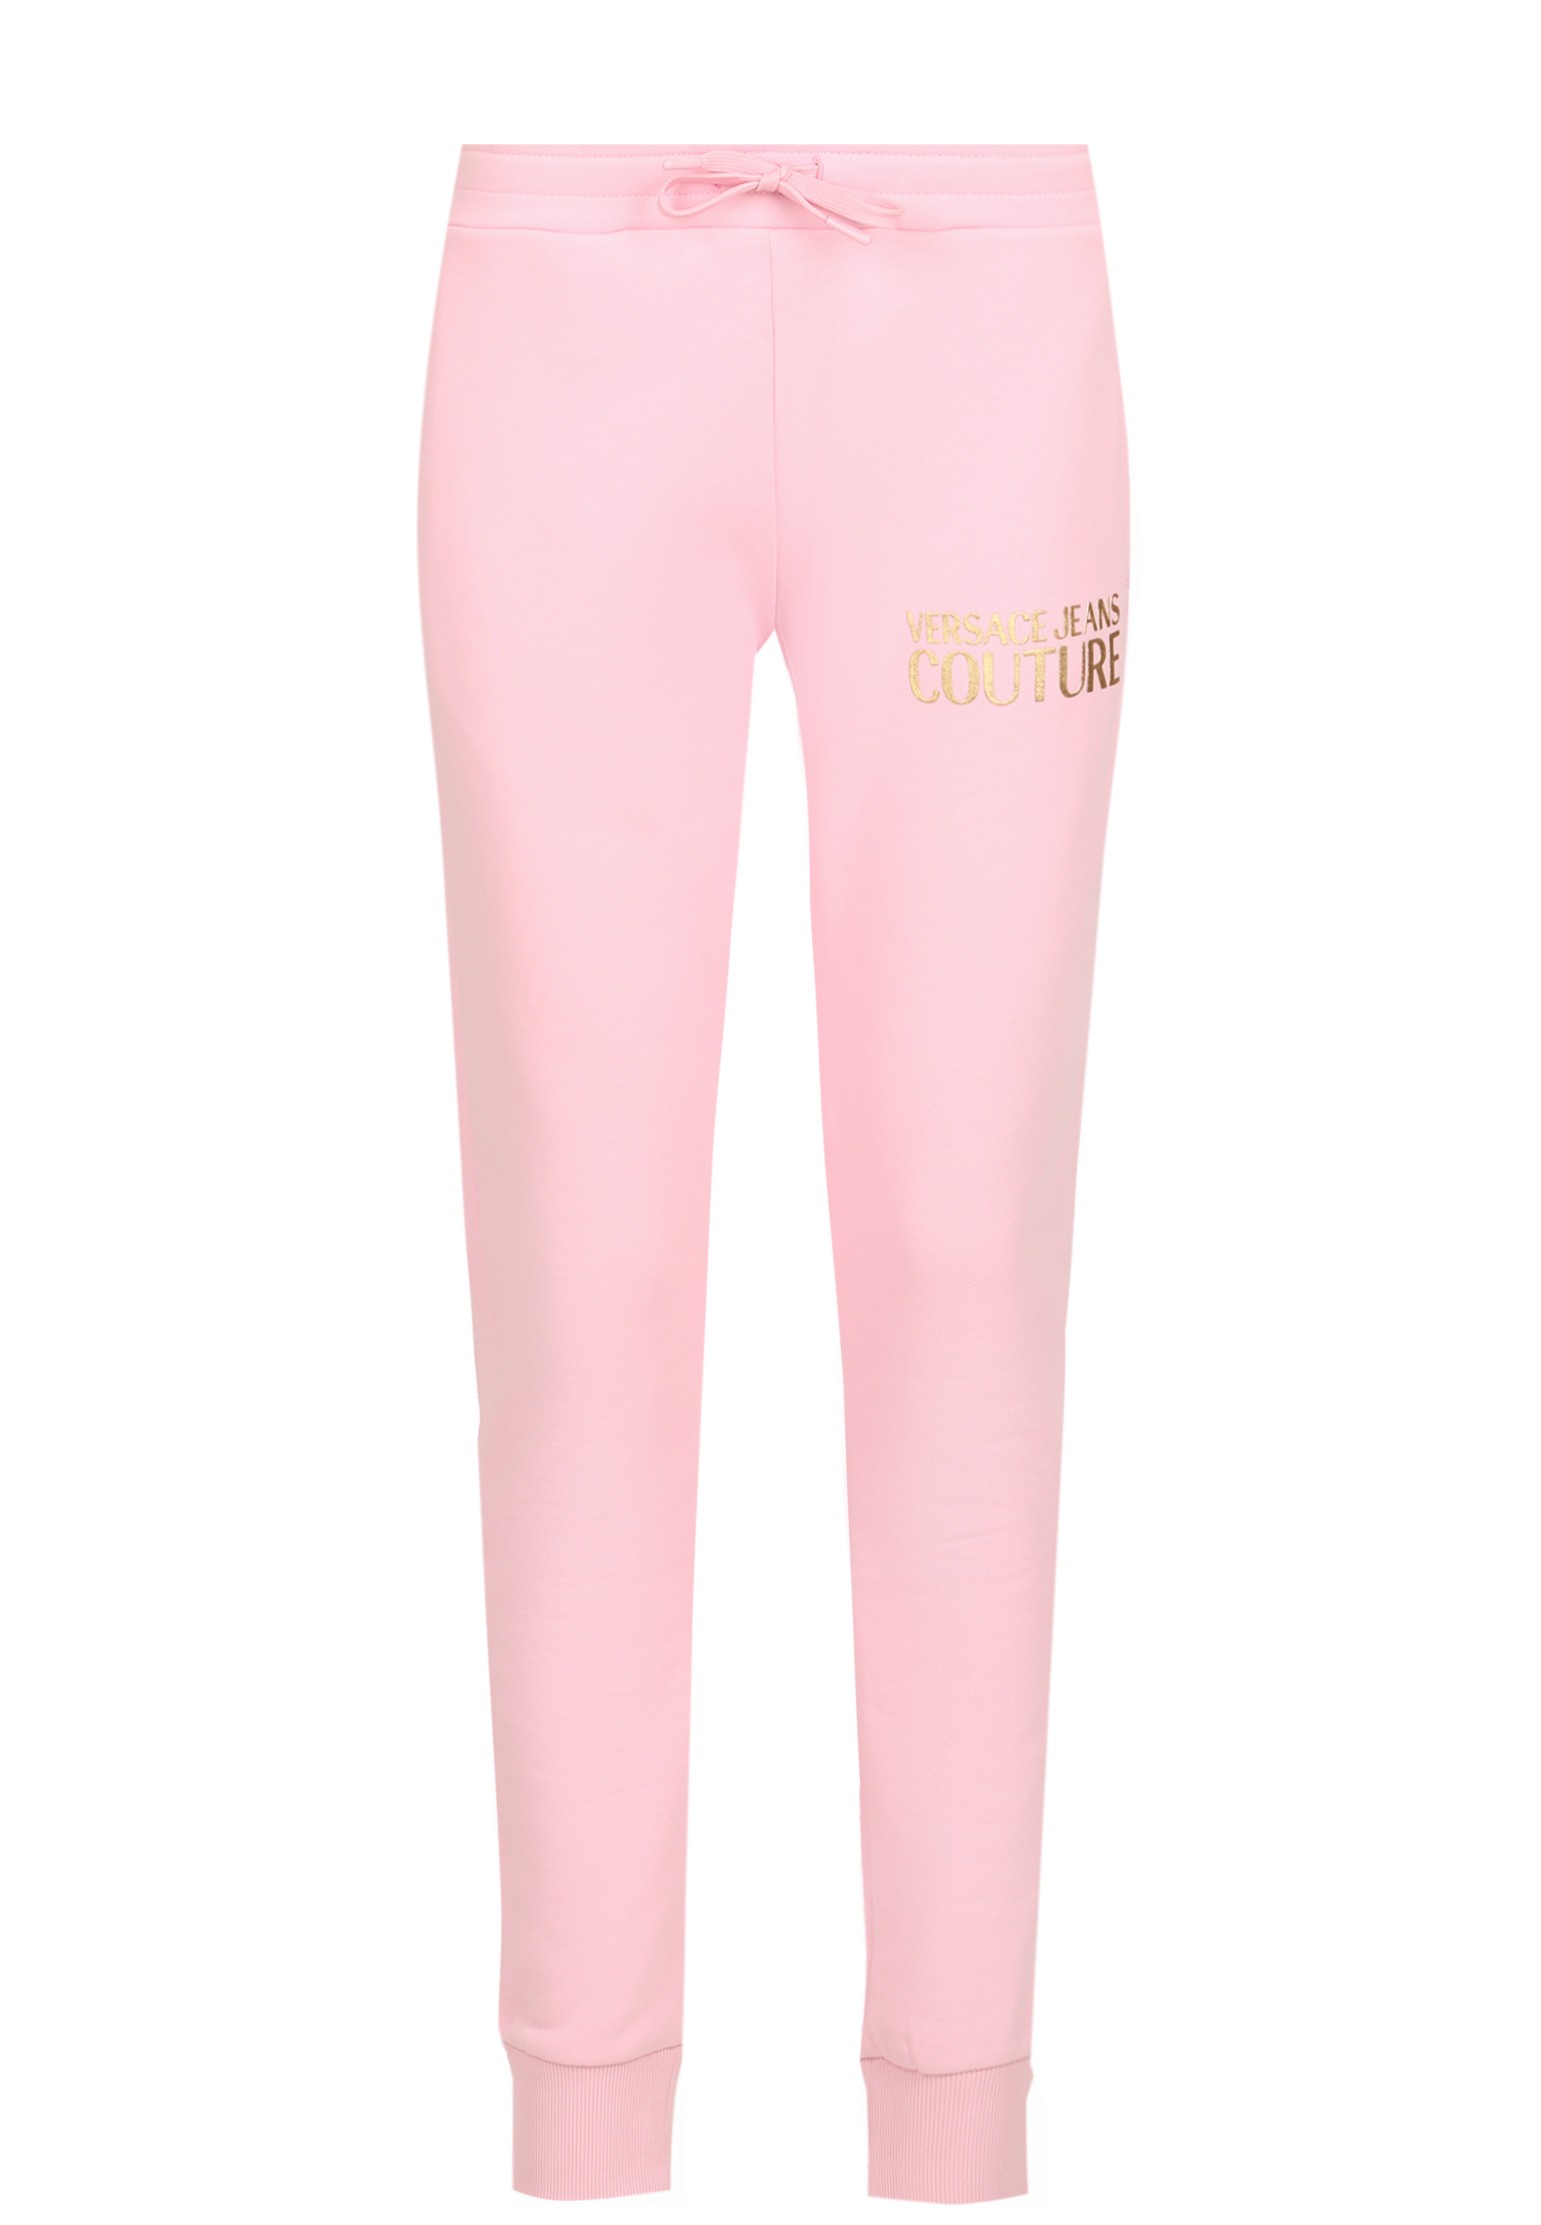 Спортивные брюки женские Versace Jeans Couture 125388 розовые XS